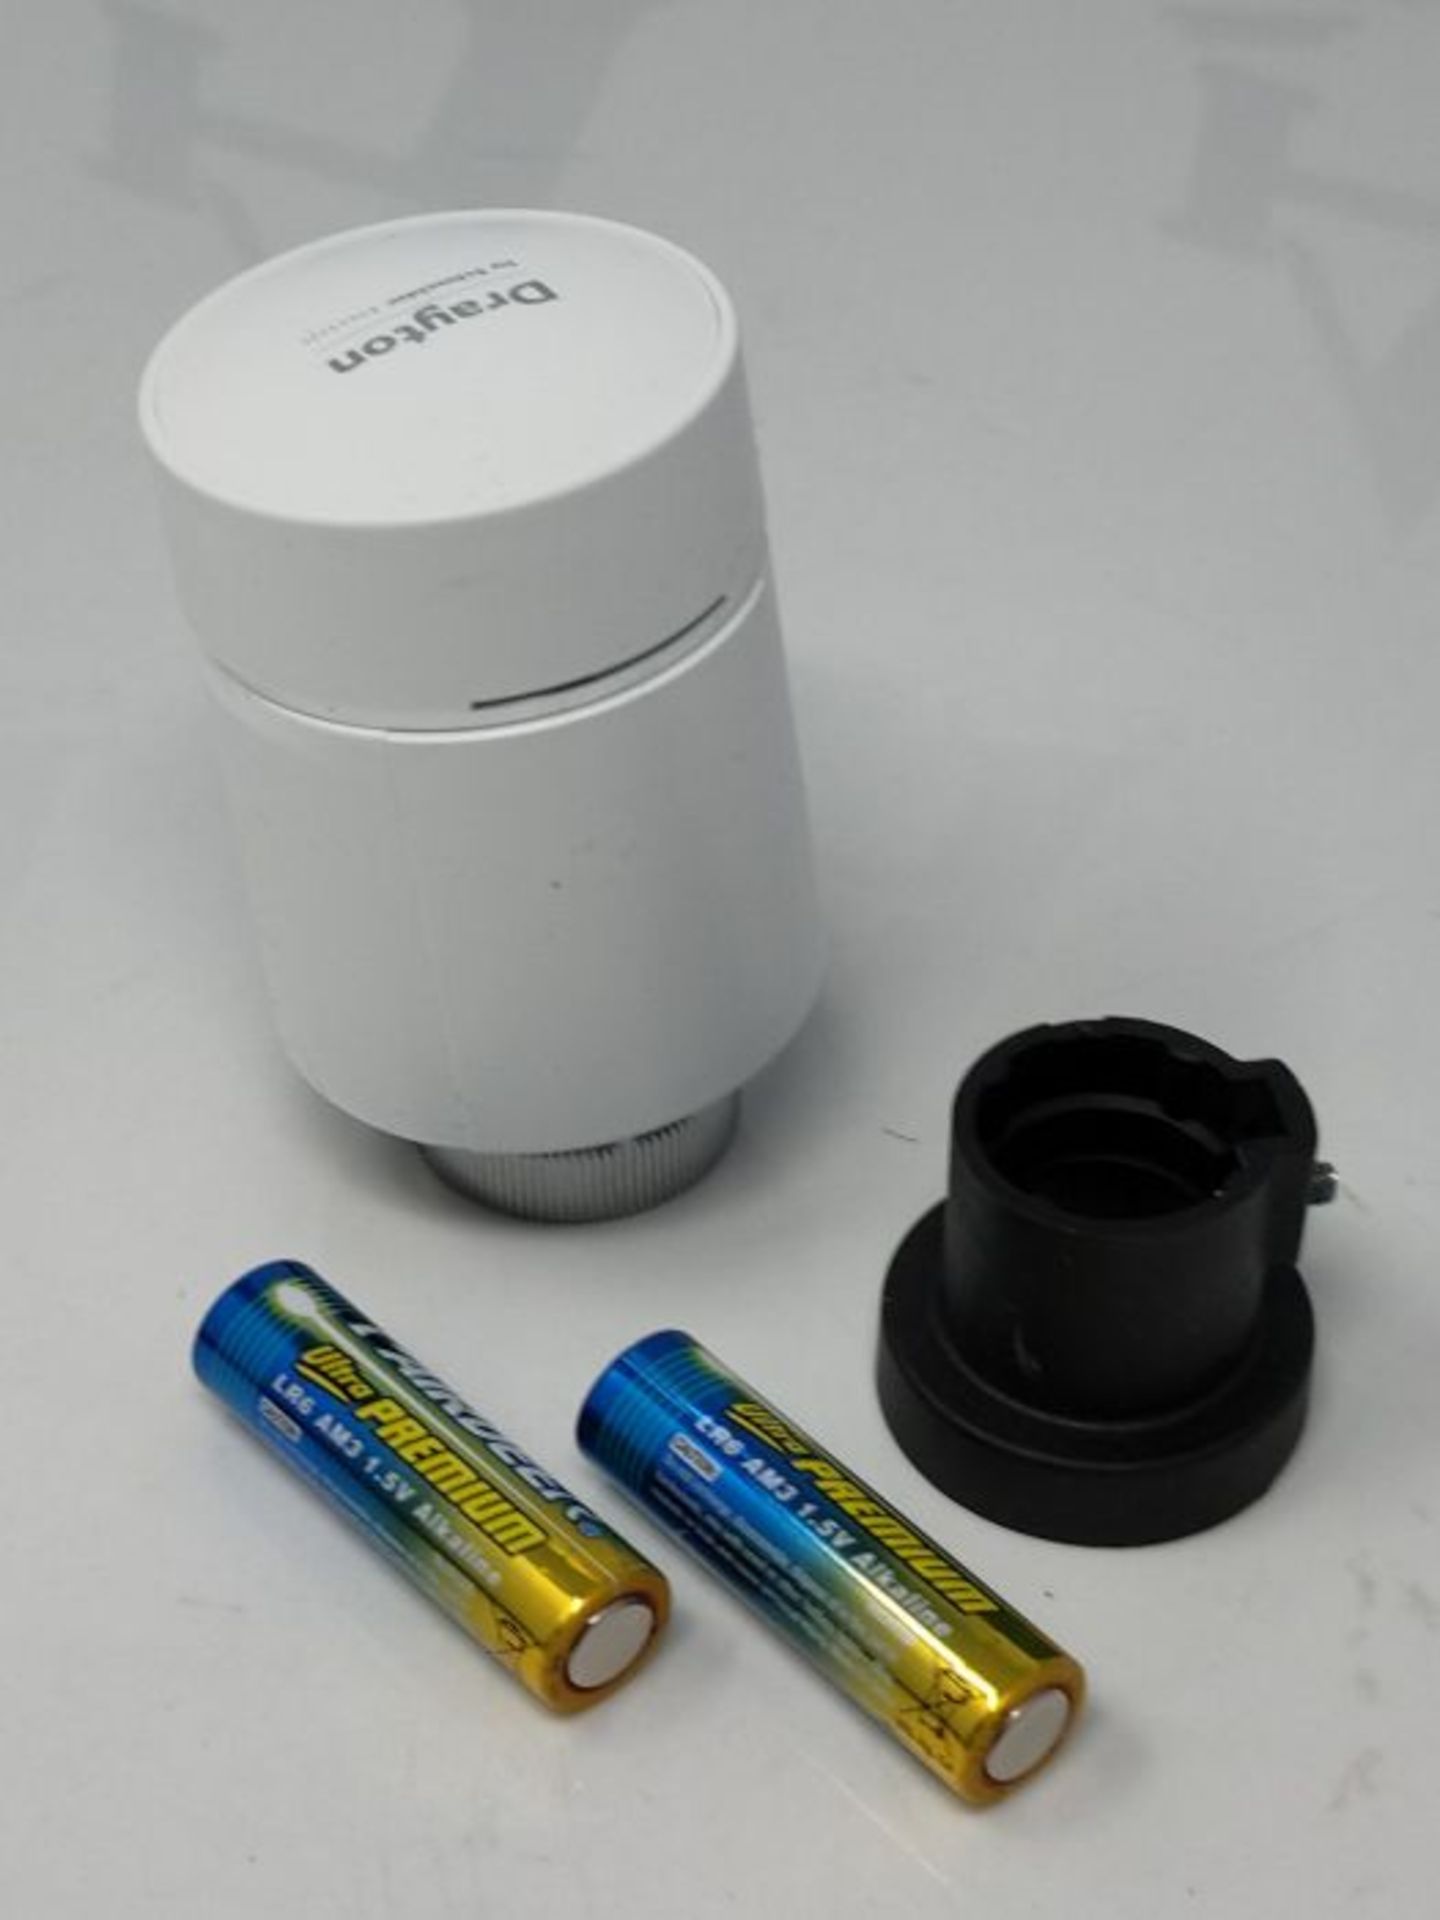 Drayton Wiser Smart Heating Radiator Thermostat Works with Amazon Alexa, Google Home, - Image 3 of 3